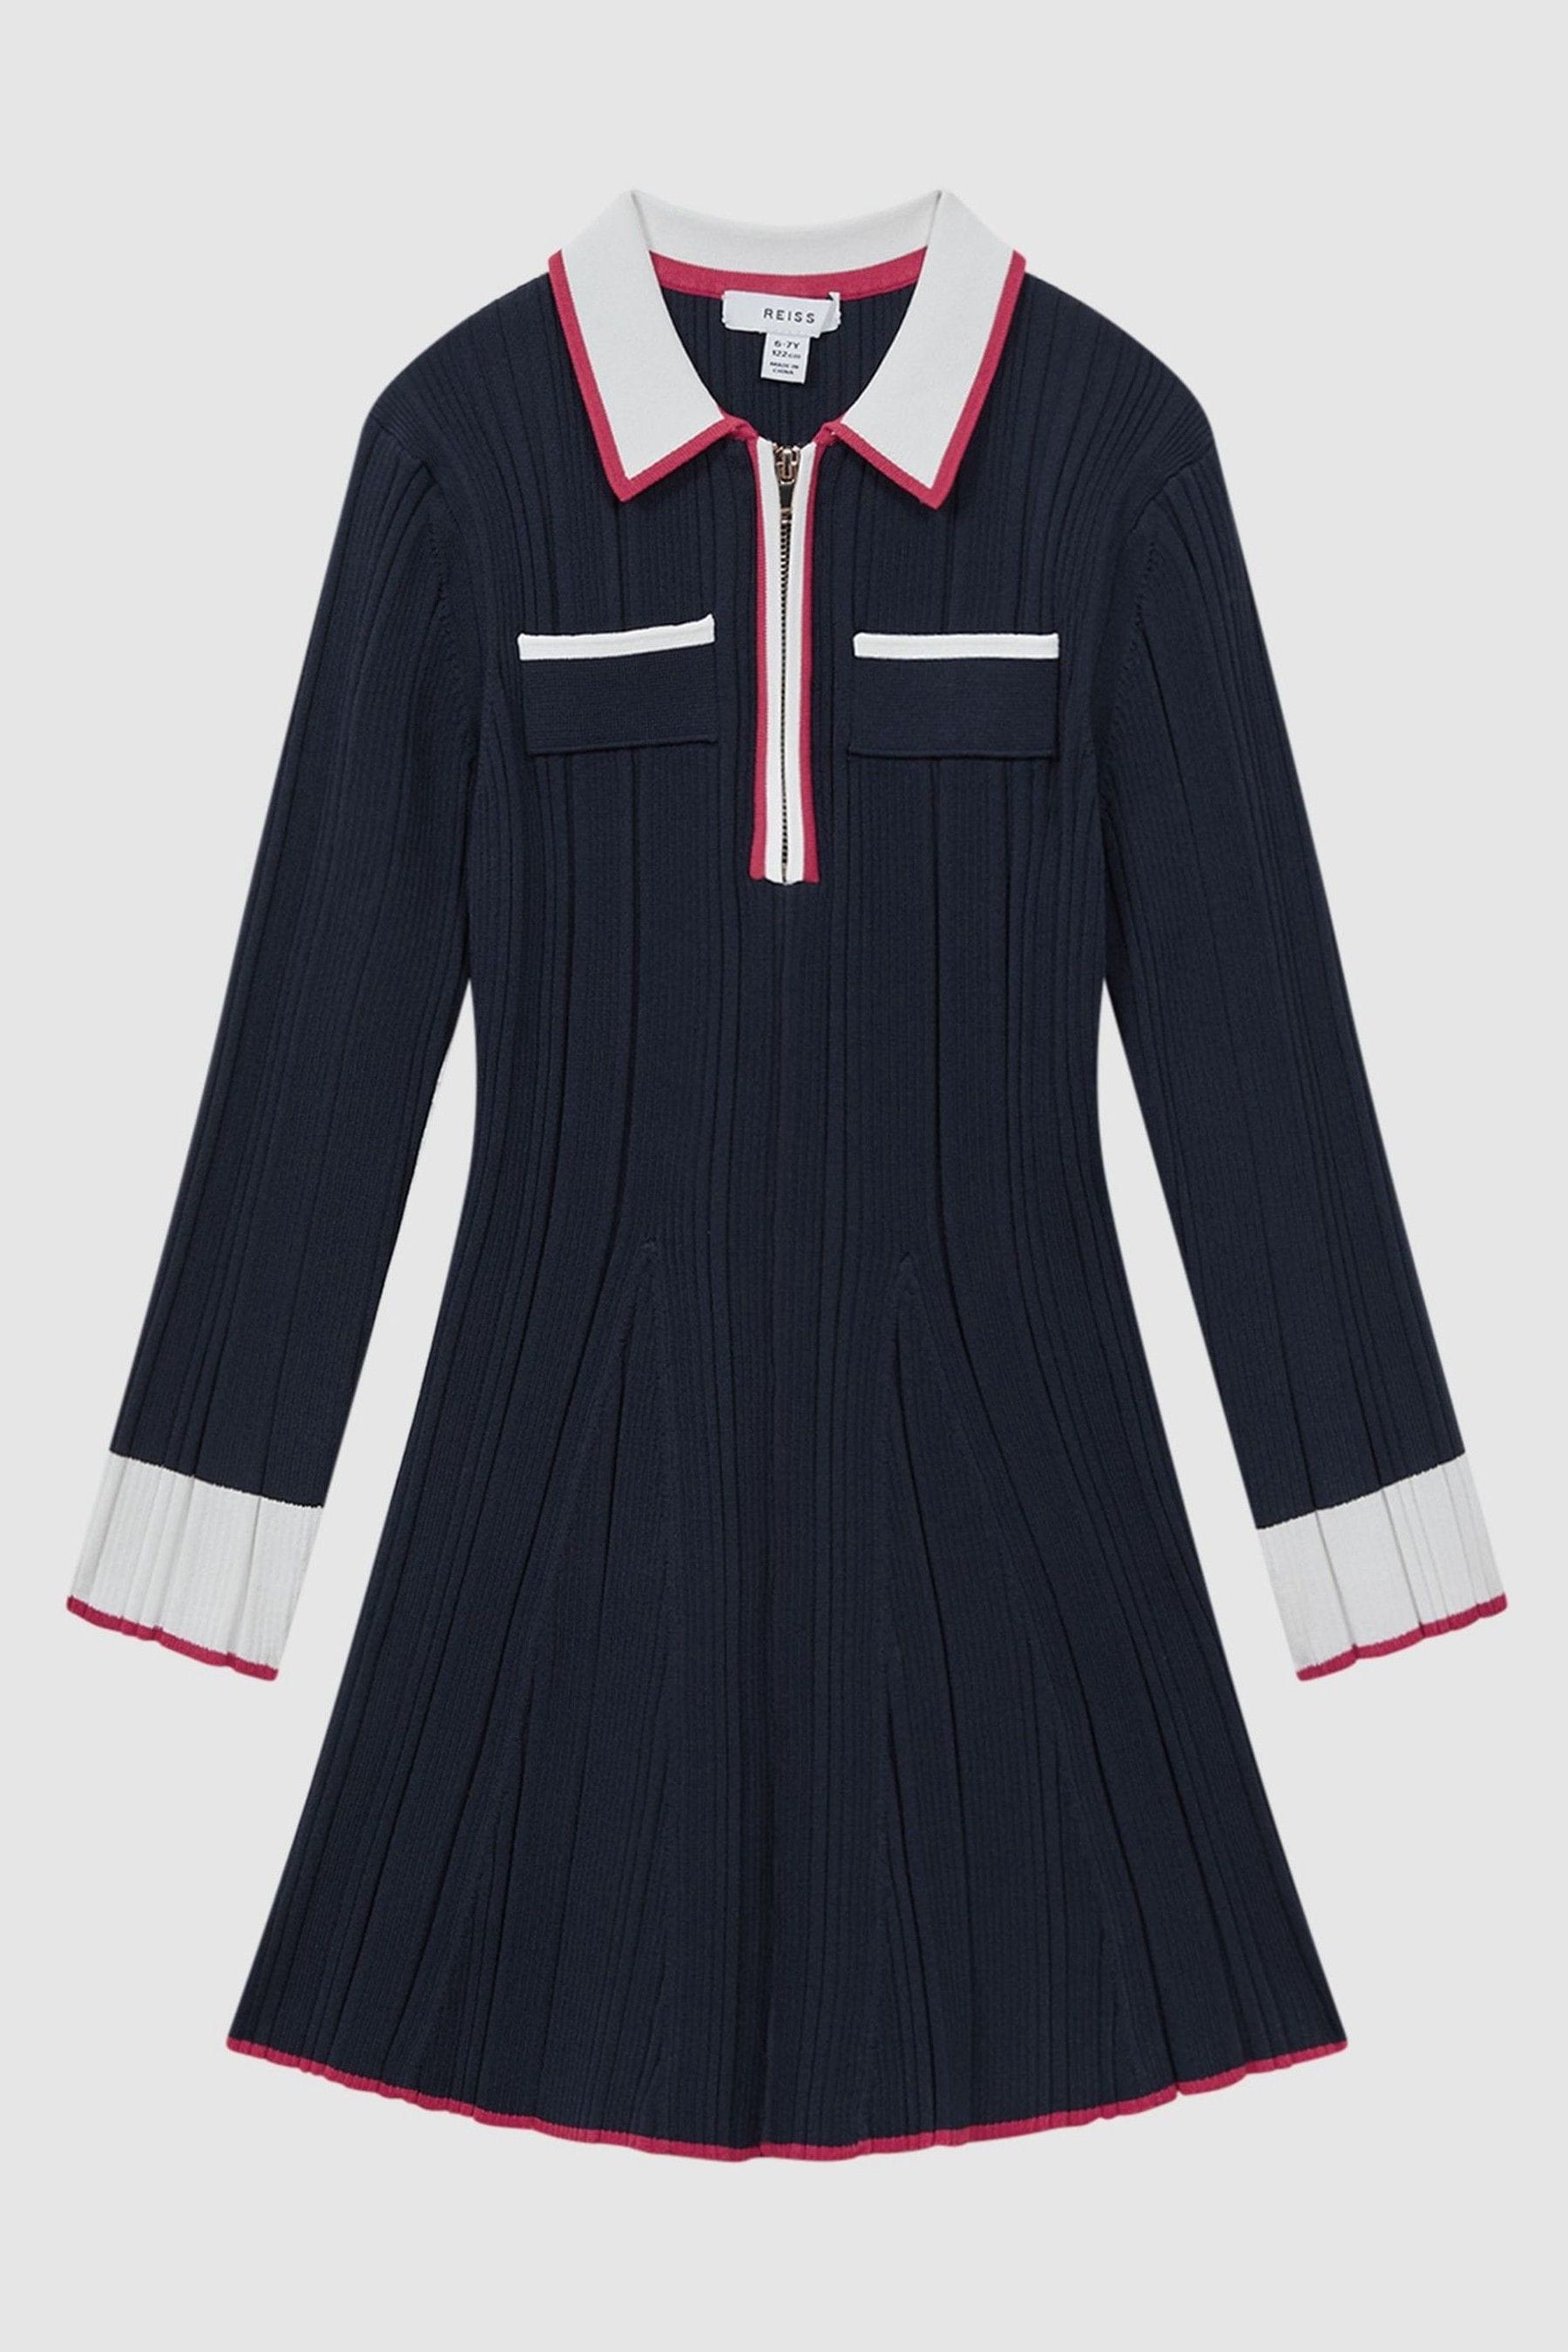 Reiss Kids' Annie - Navy Junior Ribbed Colourblock Mini Dress, Age 5-6 Years